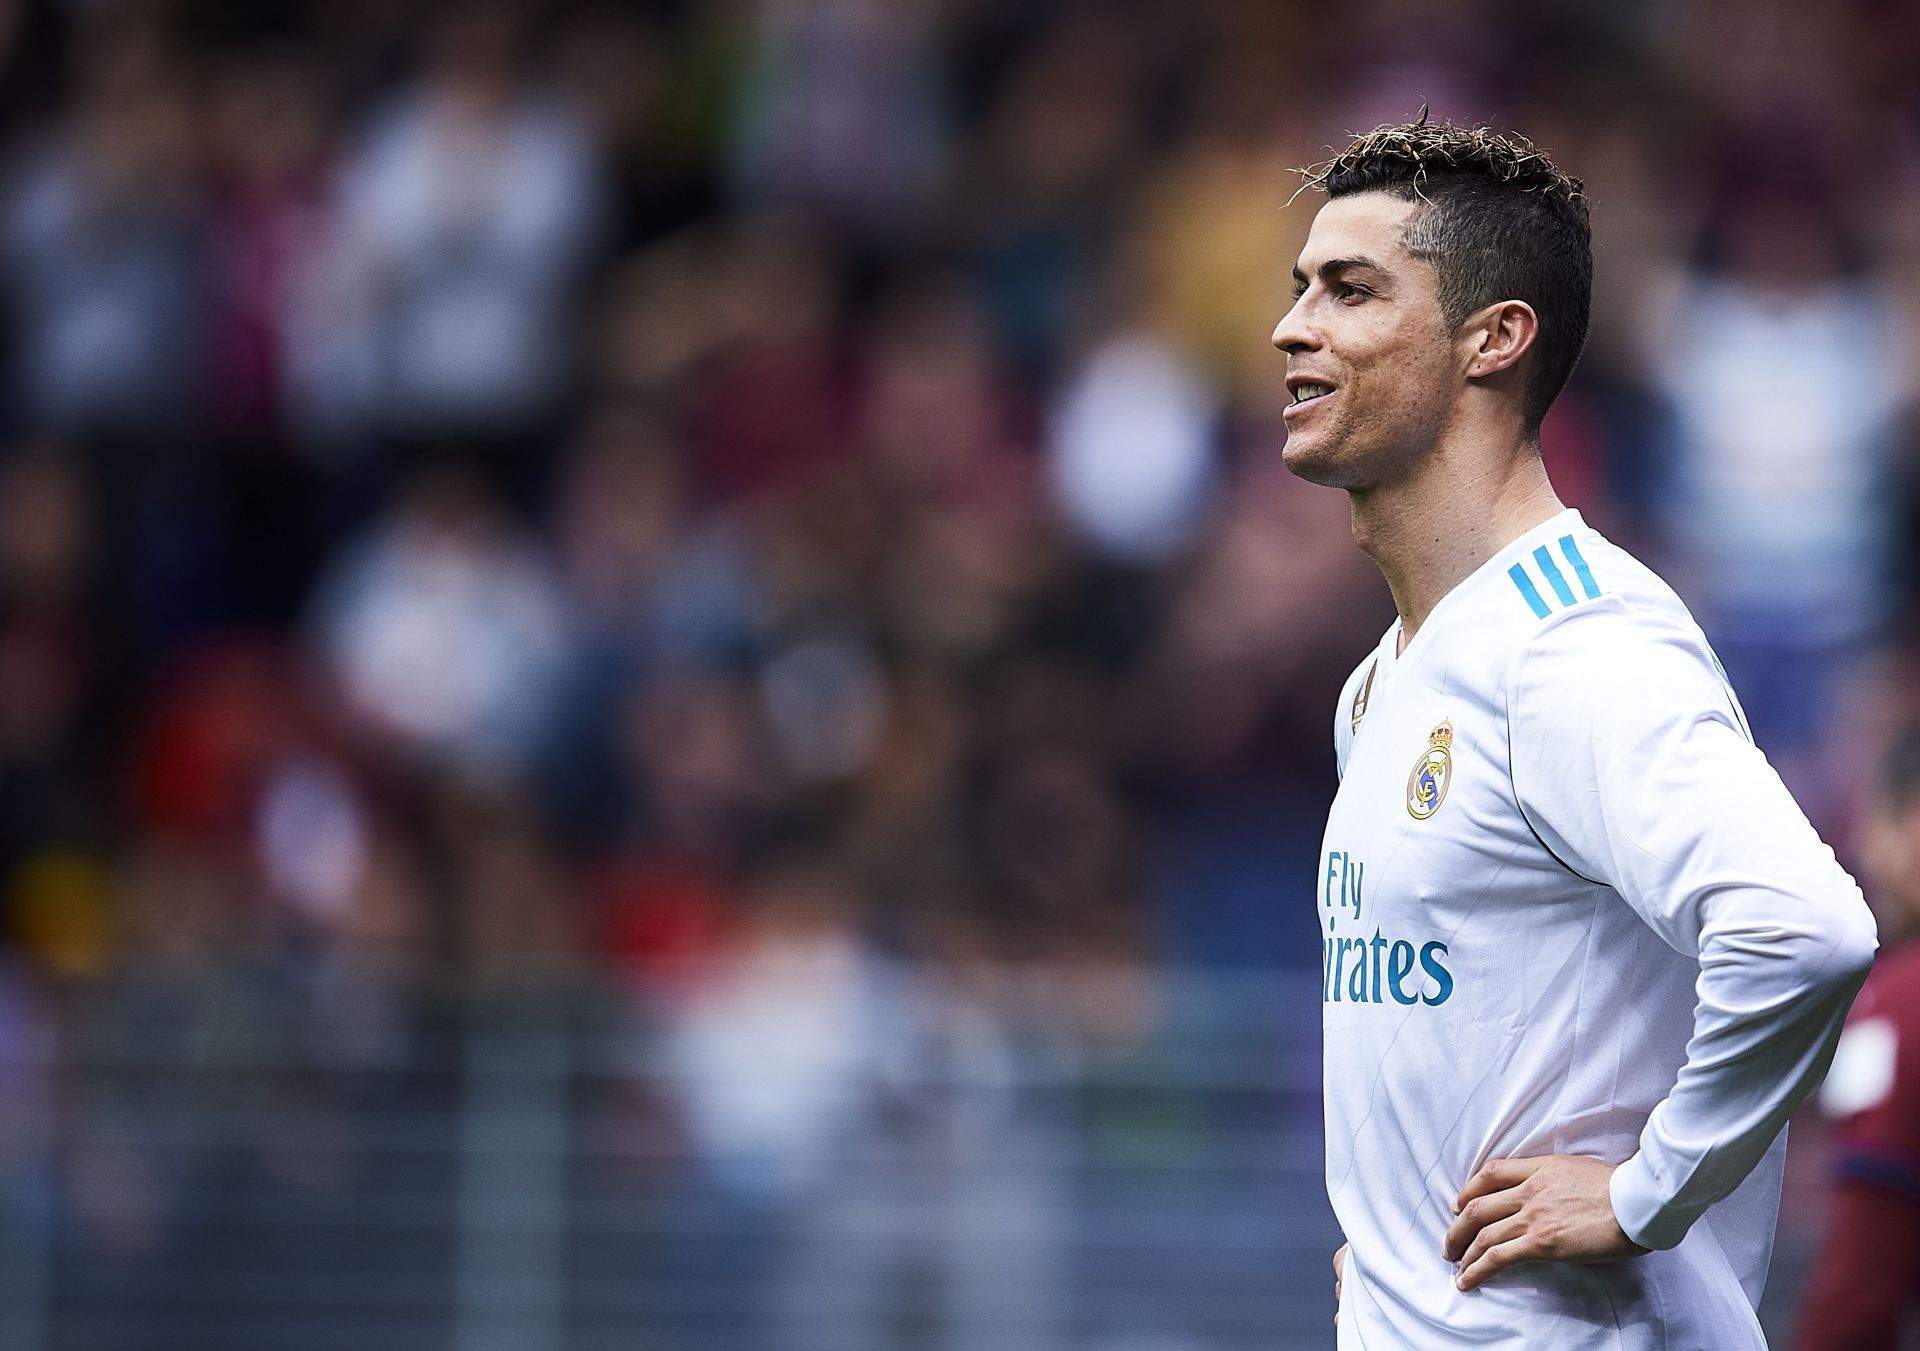 Cristiano Ronaldo could soon reunite with his former Real Madrid teammates Luka Modric and Sergio Ramos.